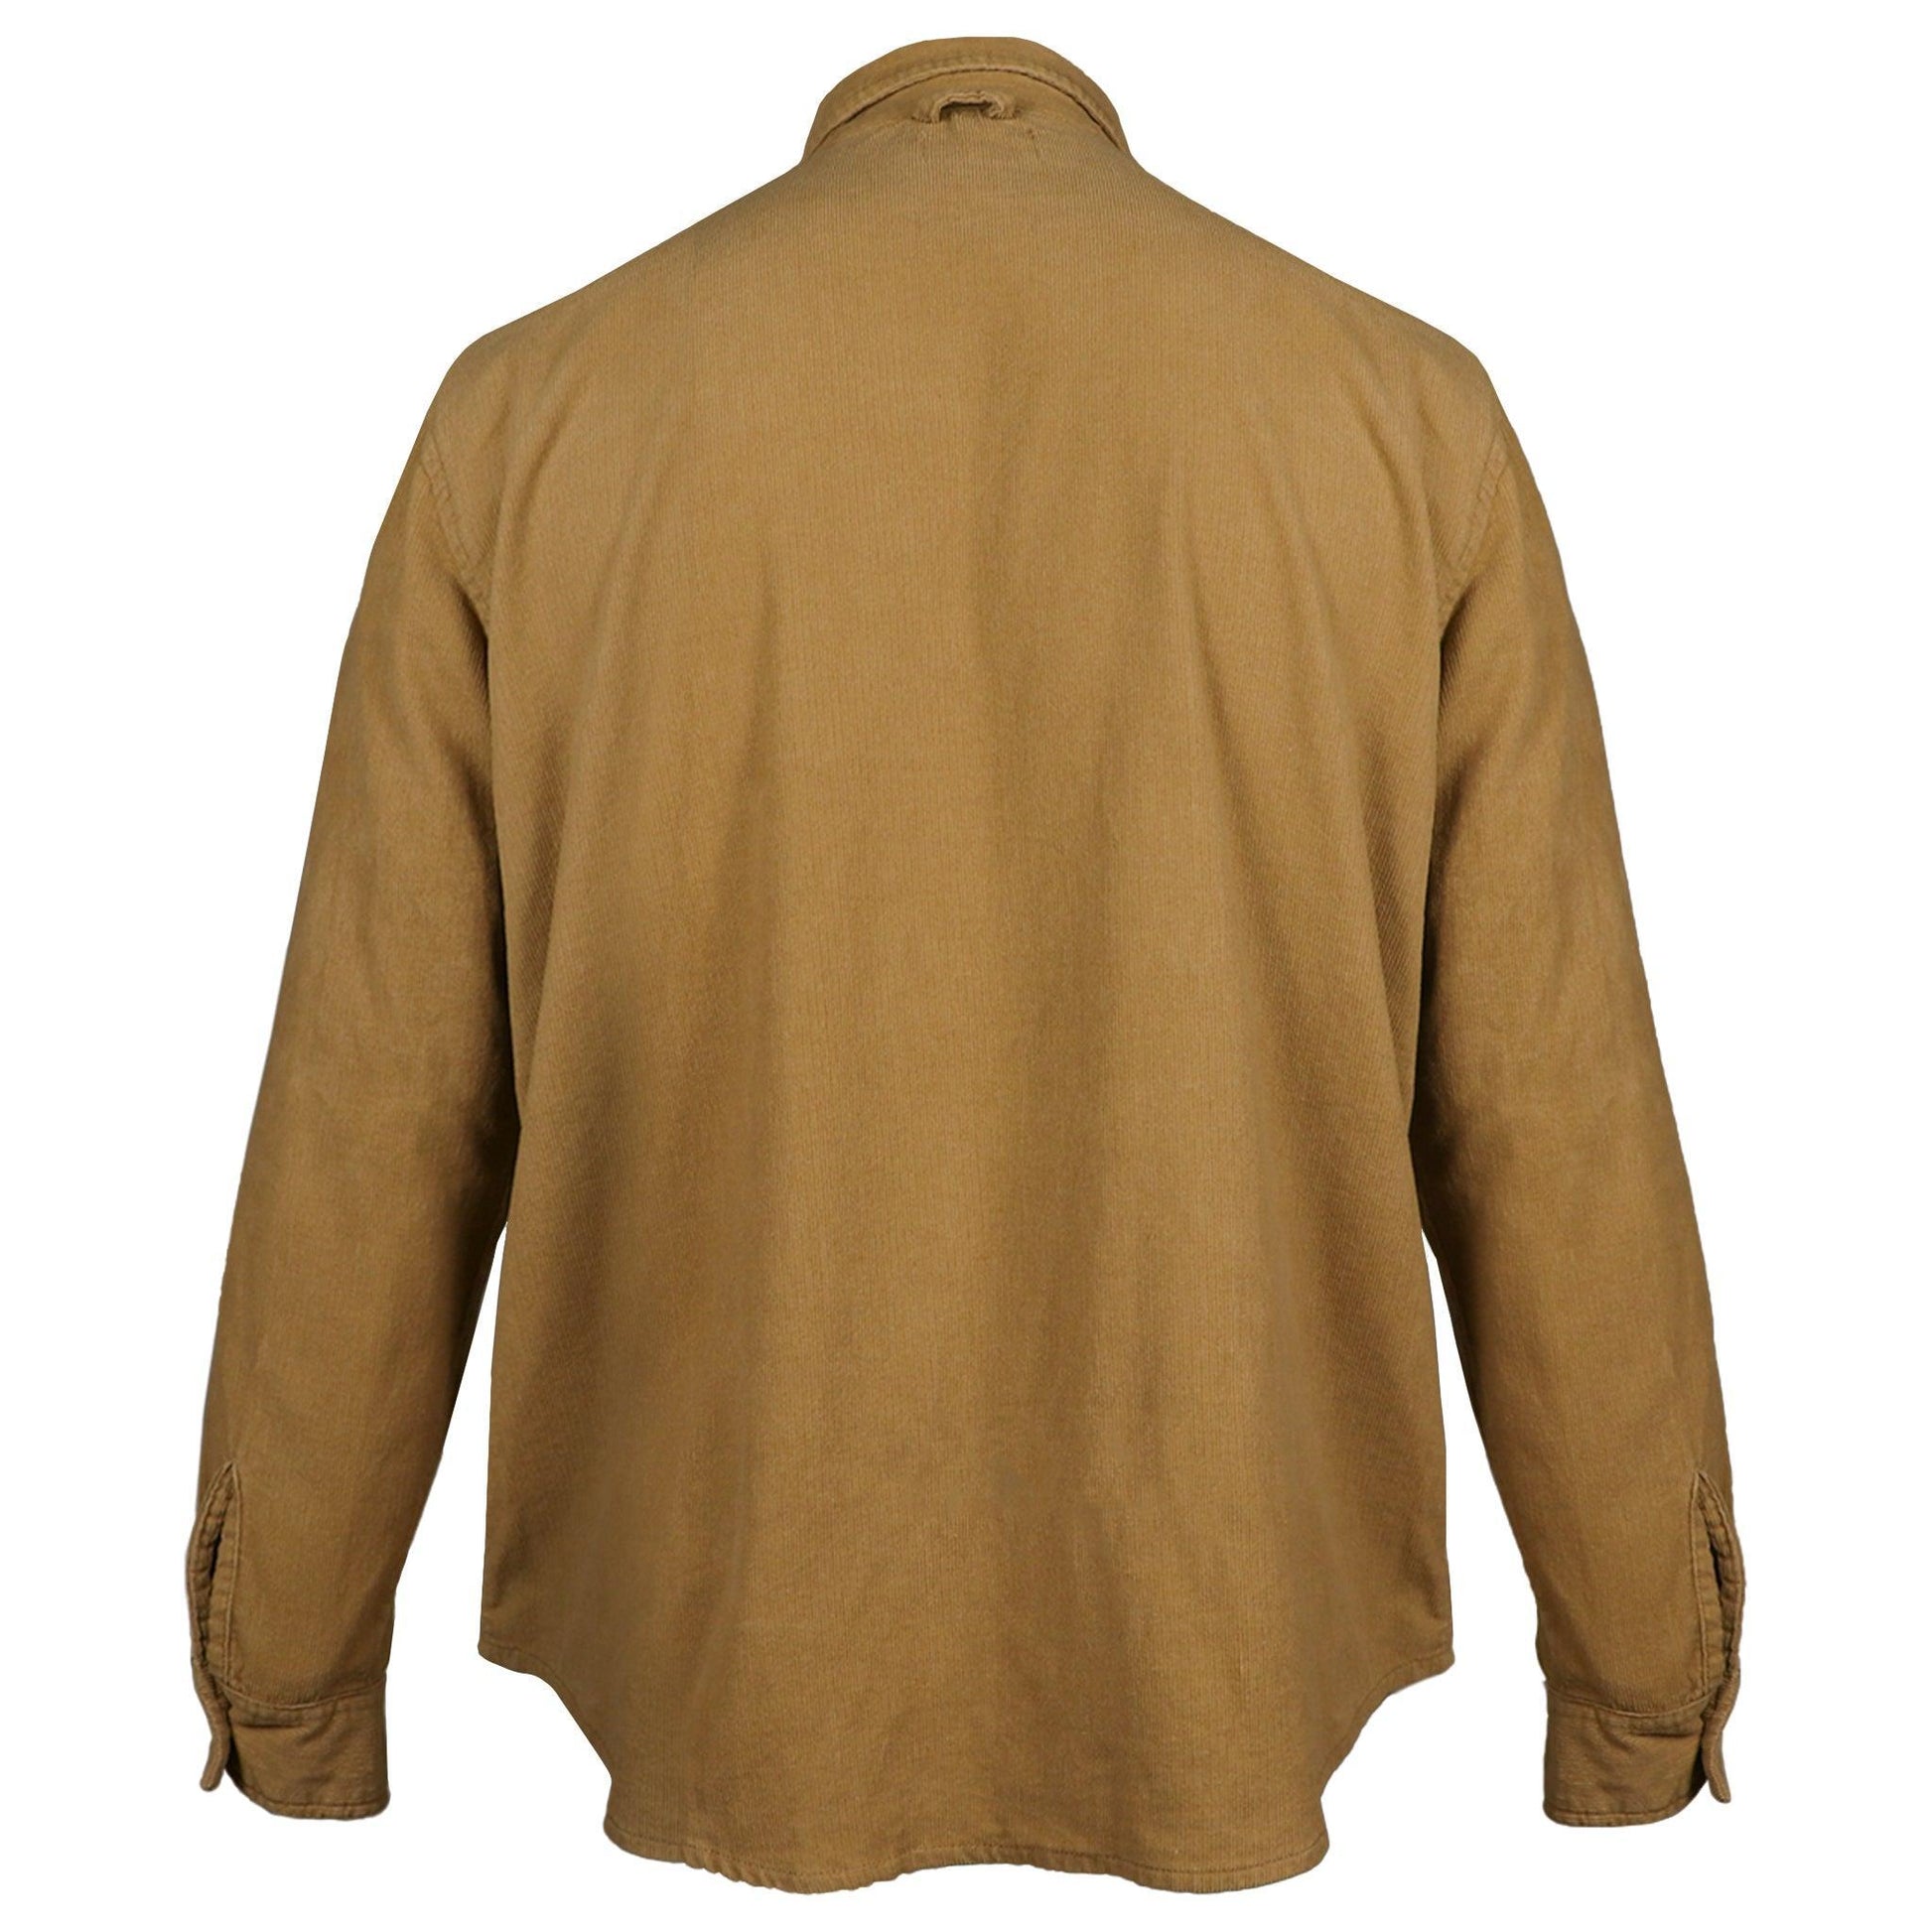 back view of tan corduroy shirt